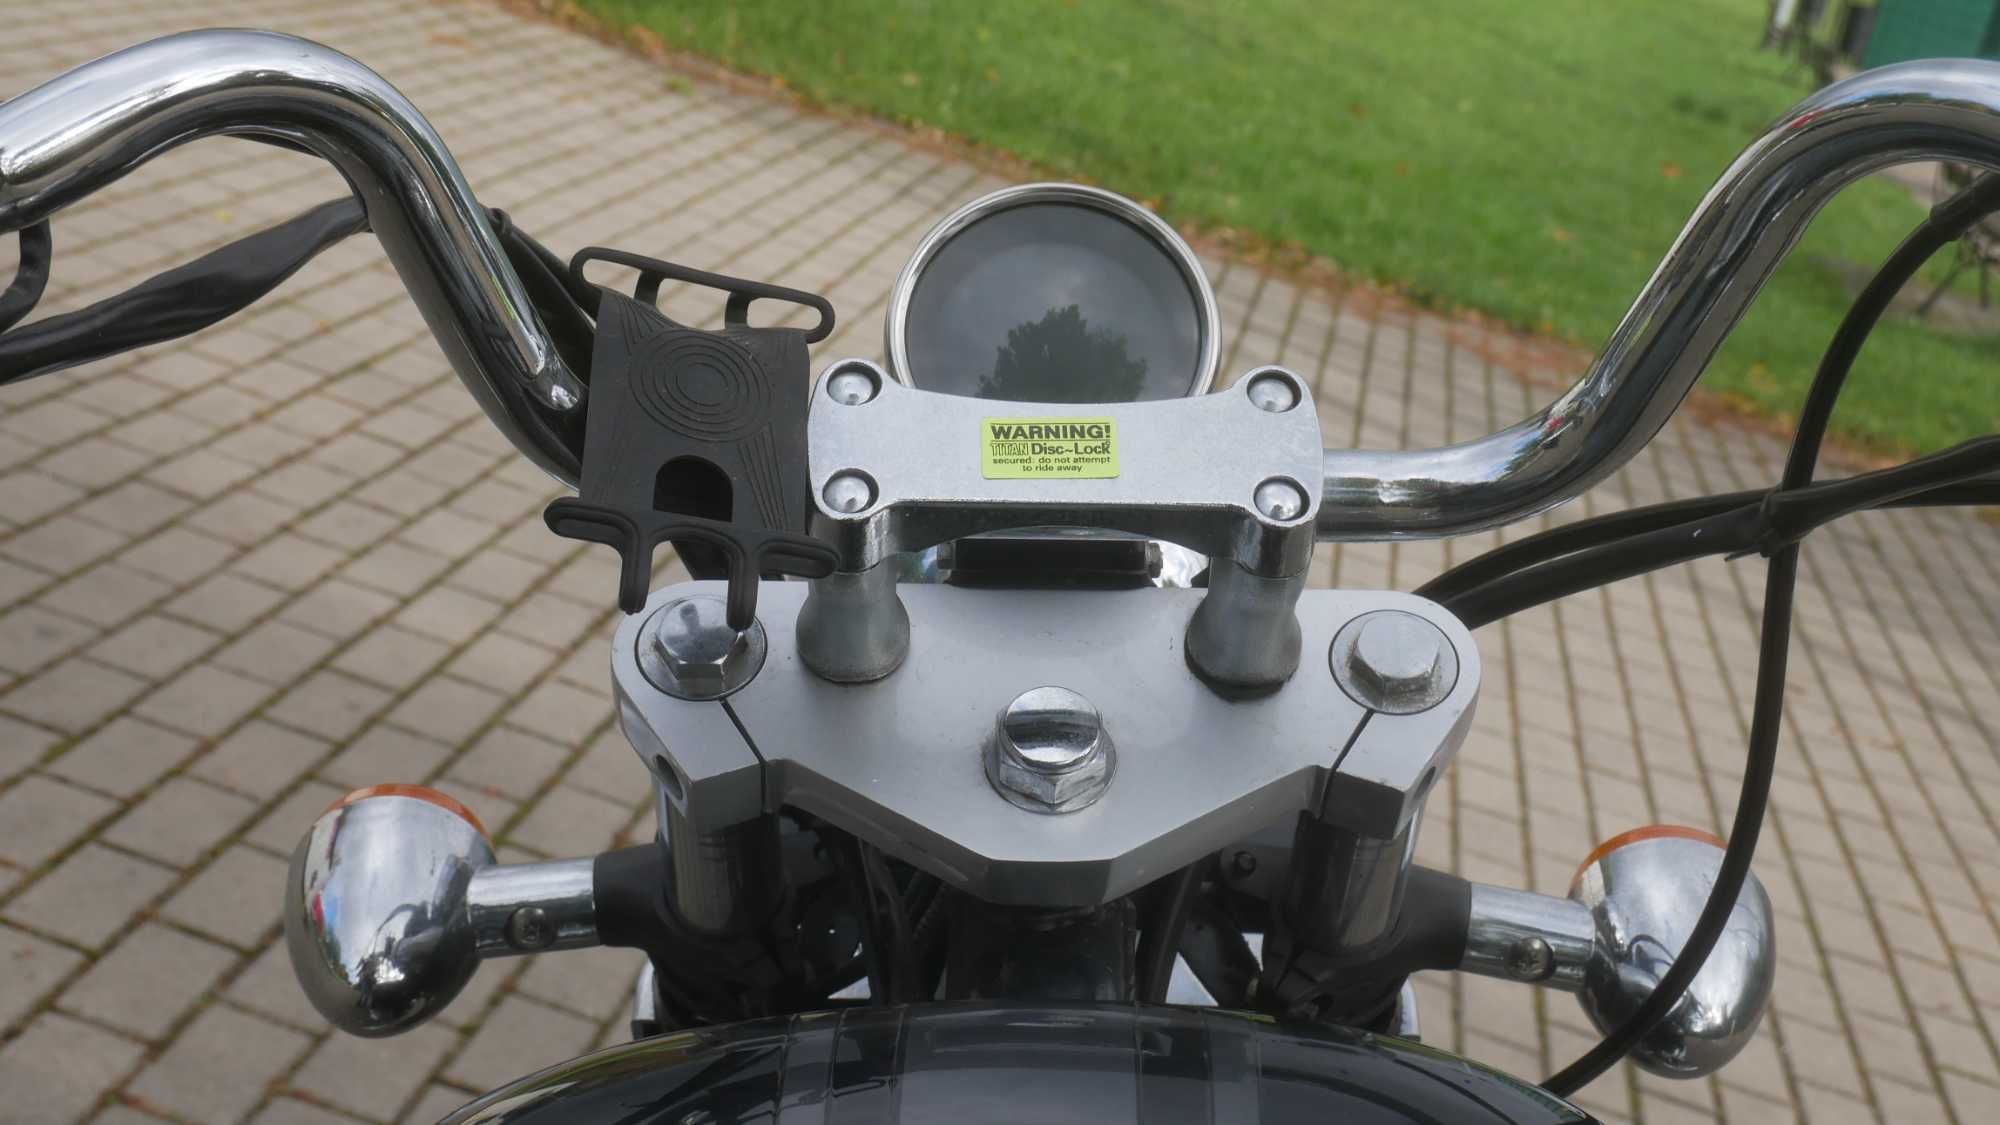 Junak M11 125 ccm Motocykl kategoria B